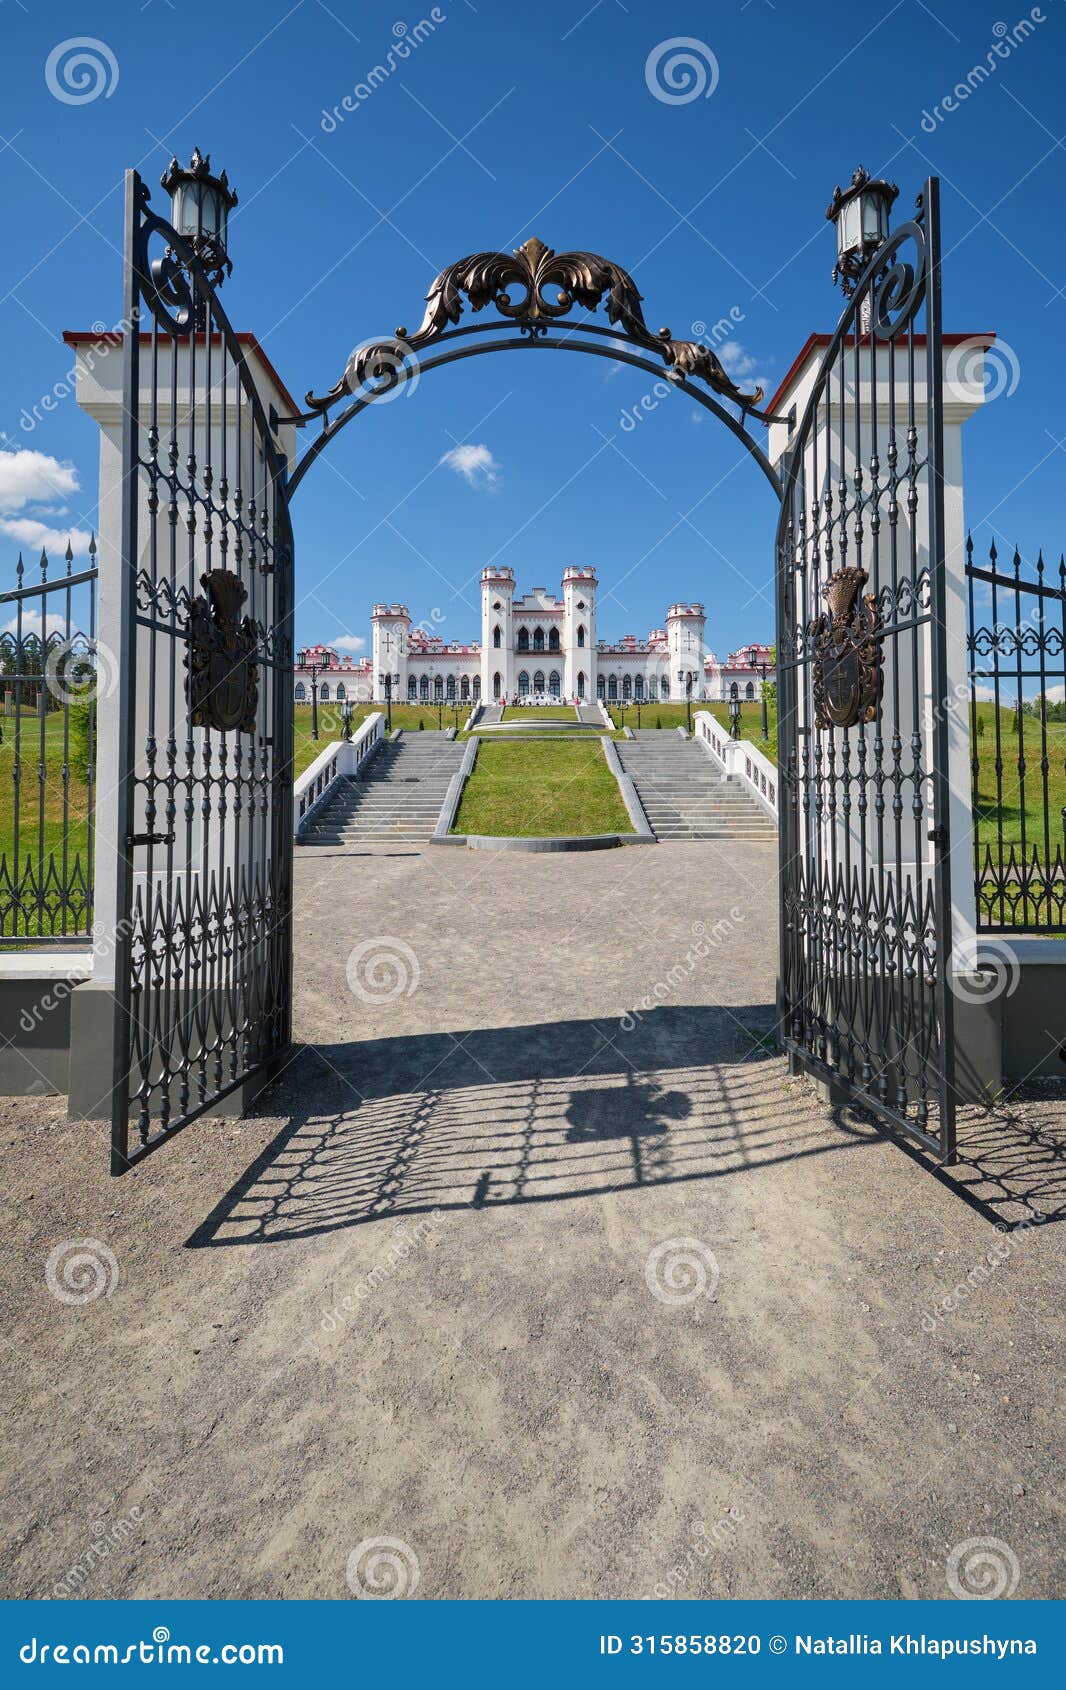 view of belorussian tourist landmark attraction - ancient kossovo castle and park complex. kossovo, brest region, belarus